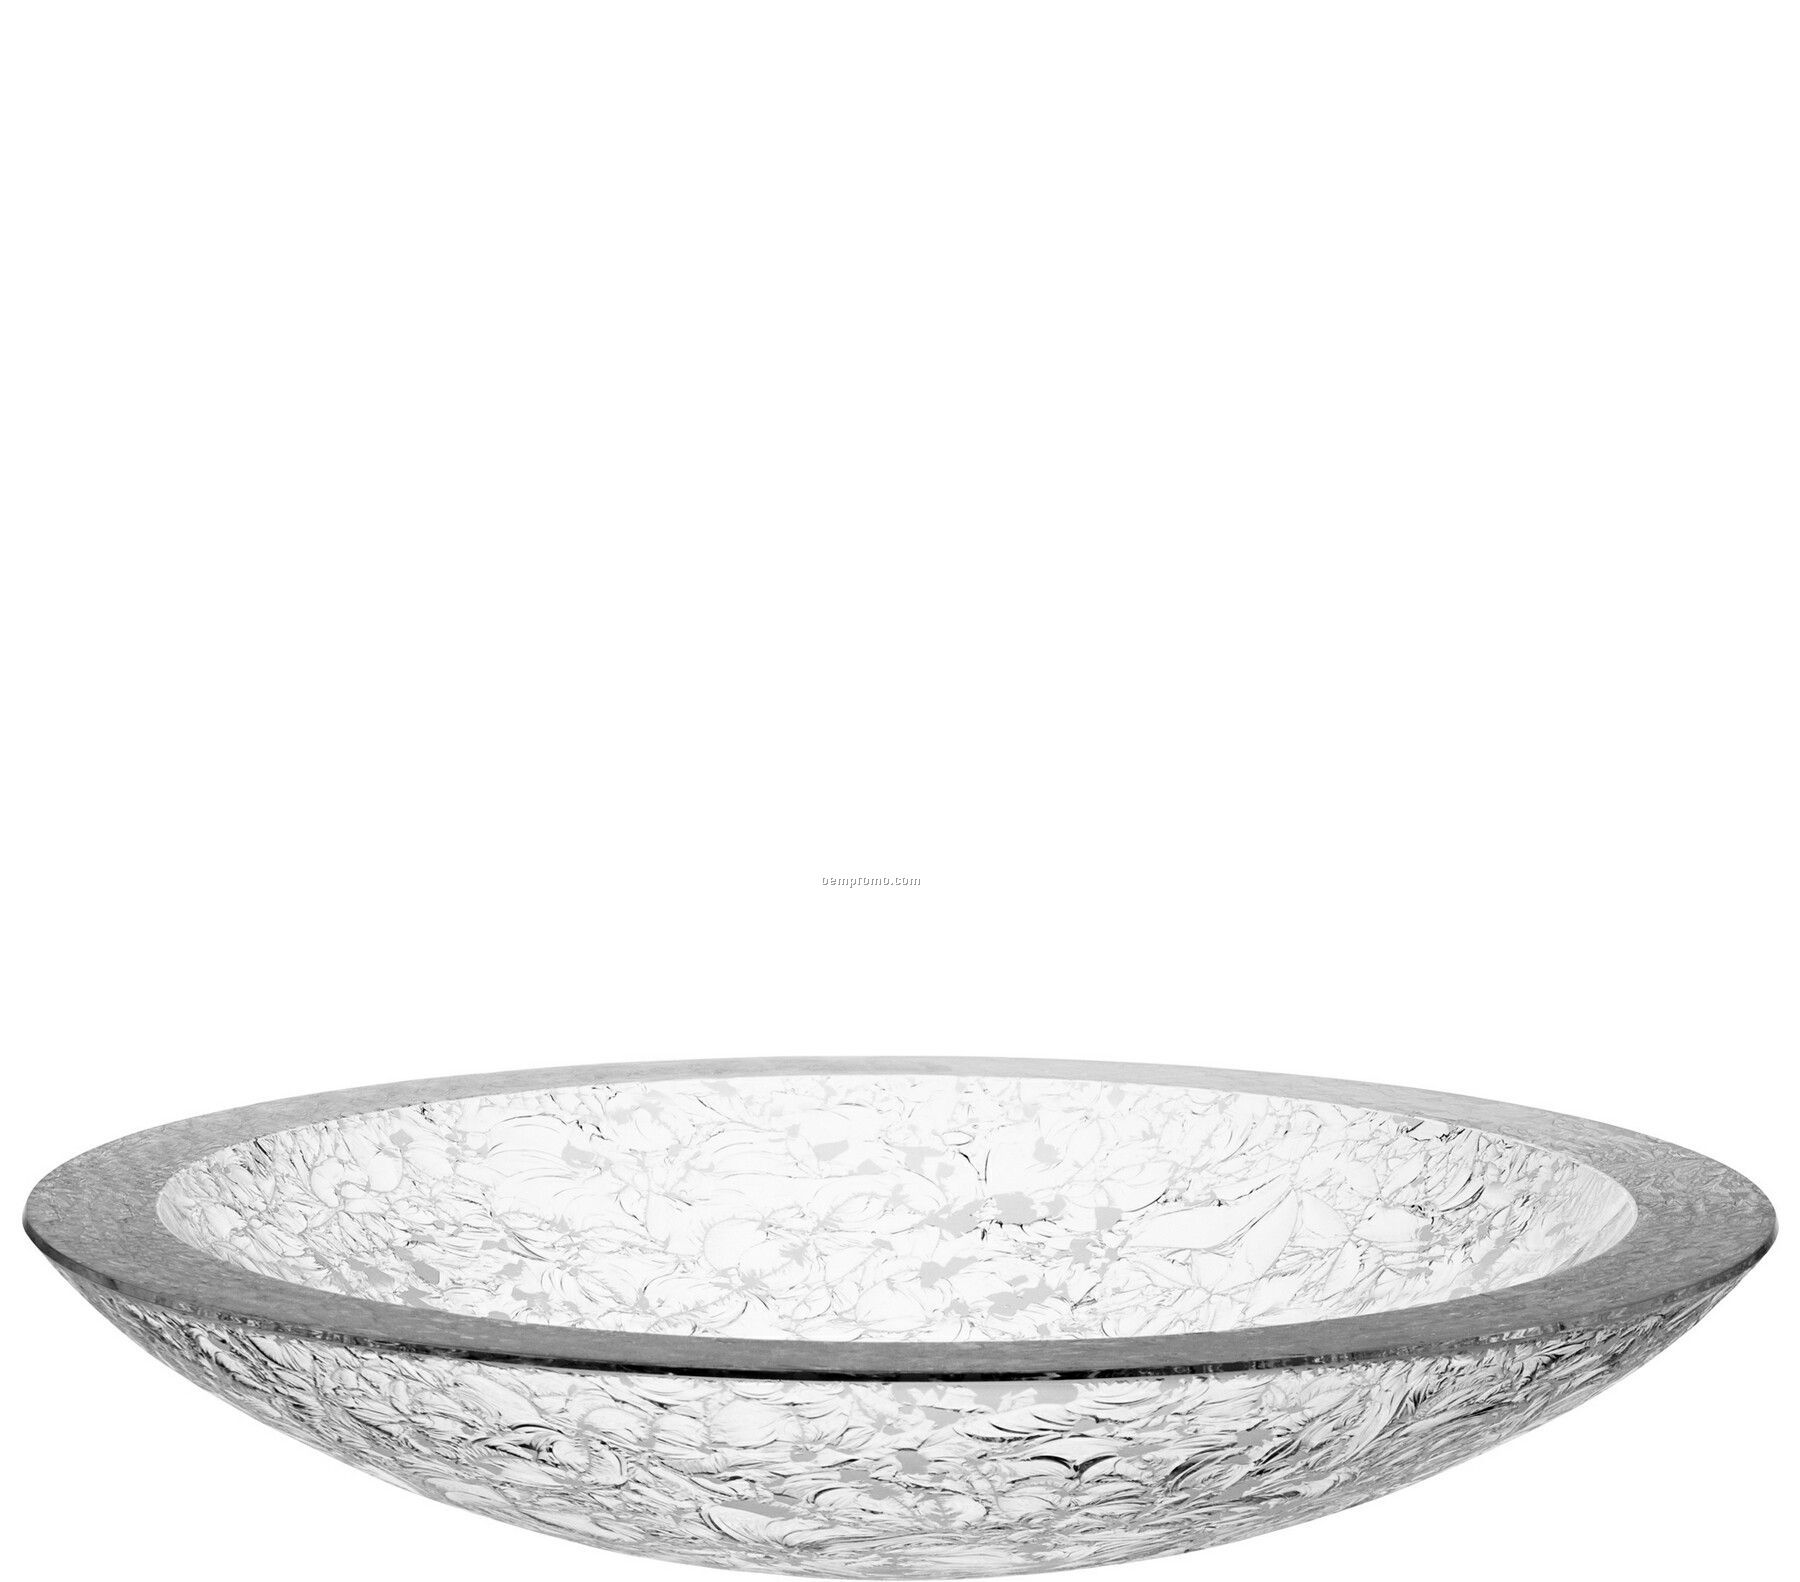 Minus 10 Degrees Crystal Bowl By Ingegerd Raman (2 3/4"X13 3/4")